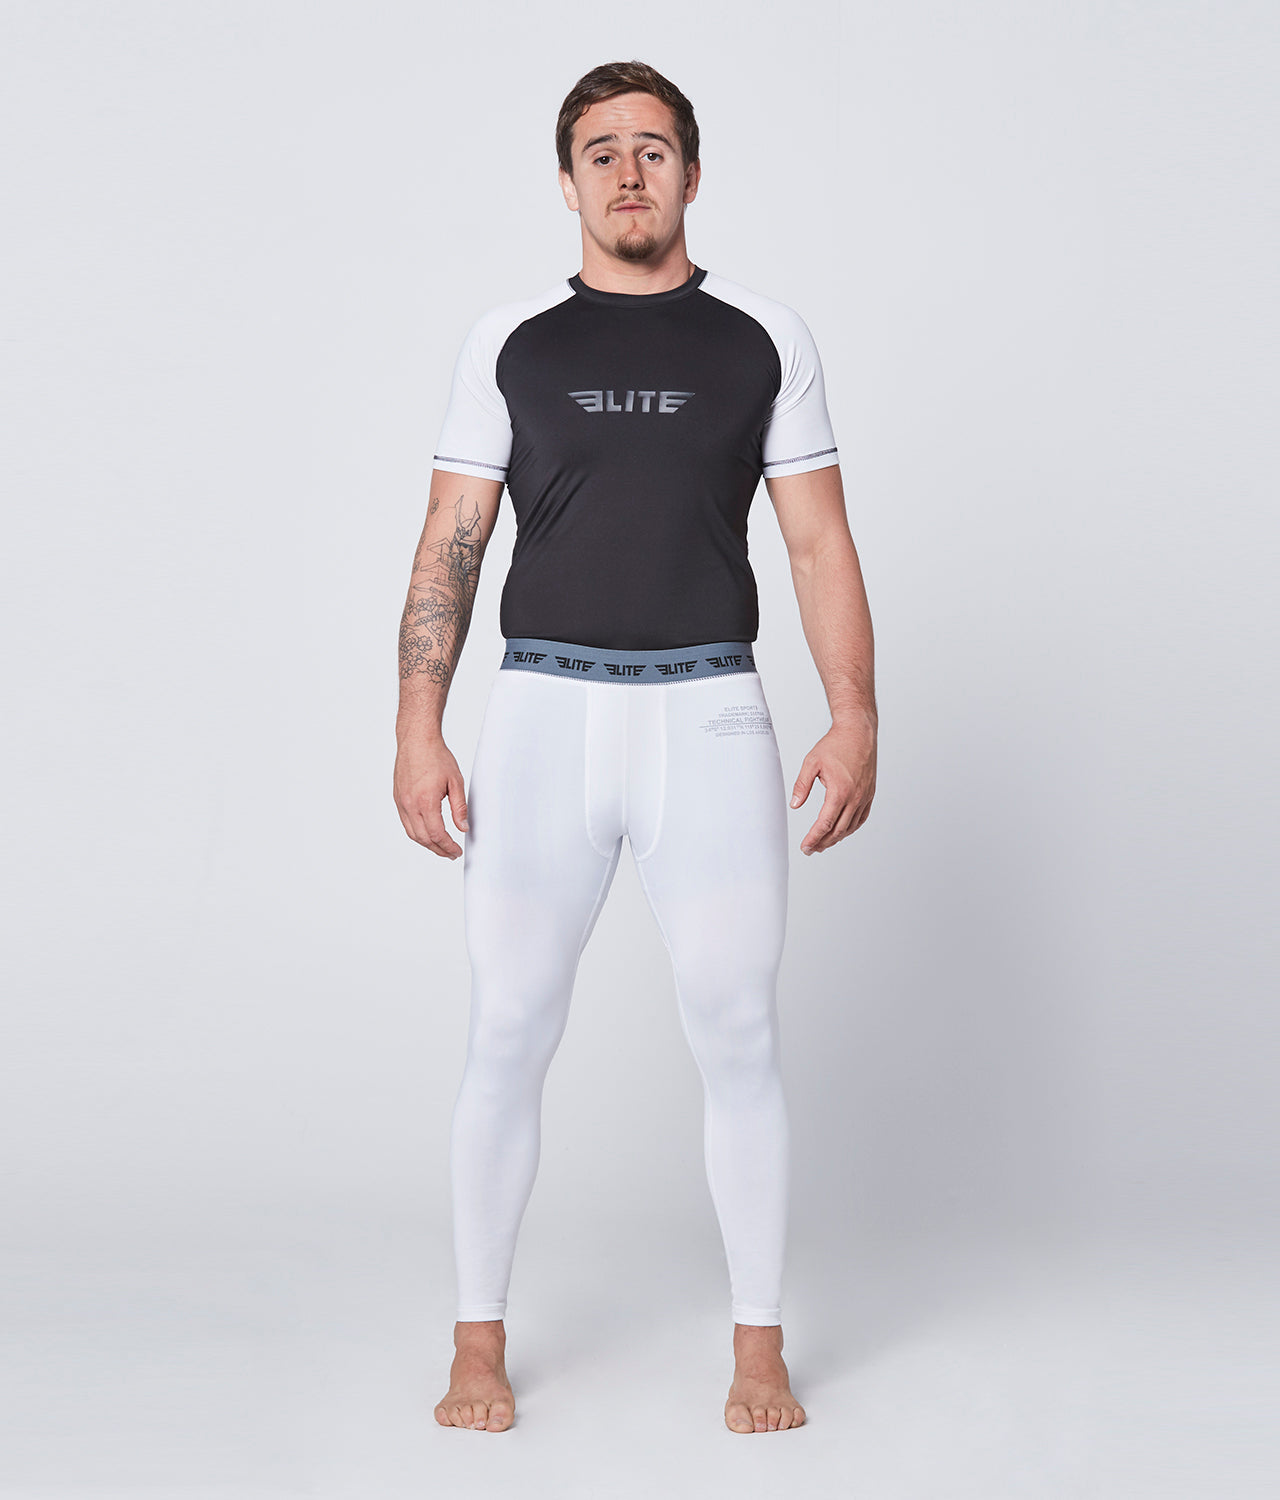 Men's Plain White Compression Boxing Spat Pants